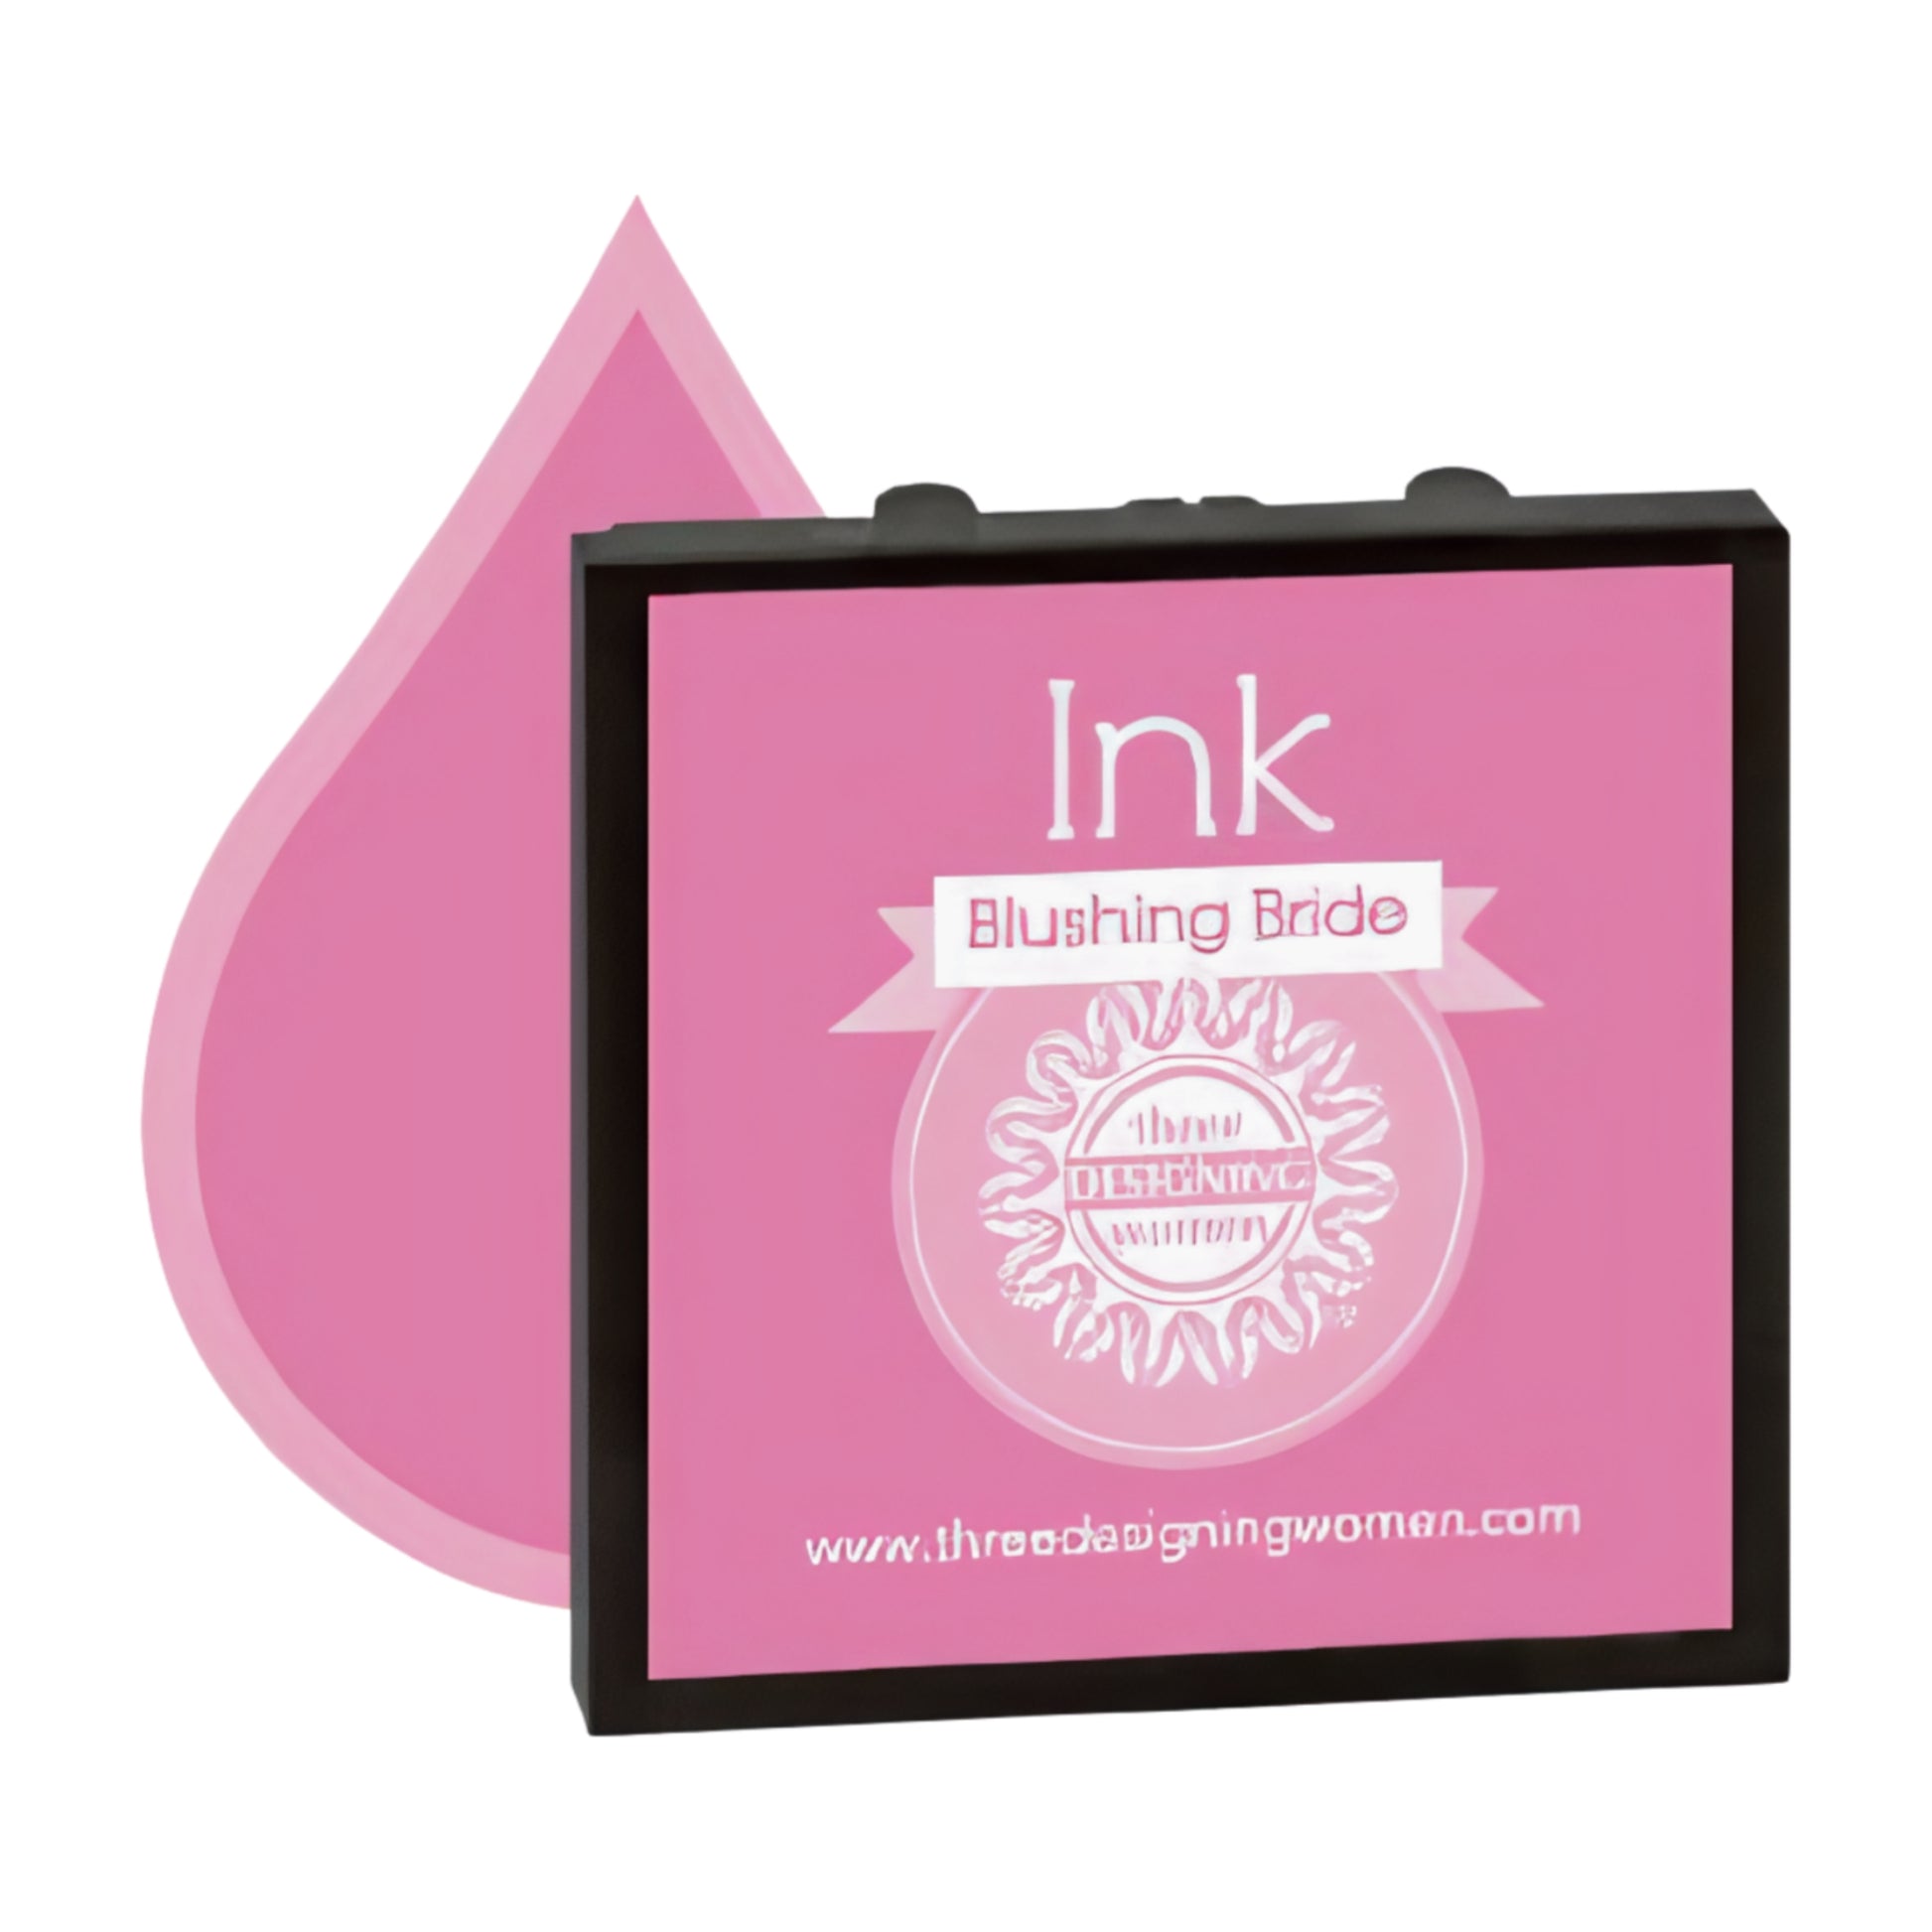 Ink Replacement Cartridge "Blushing Bride" for Self-Inking Stampers Three Designing Women